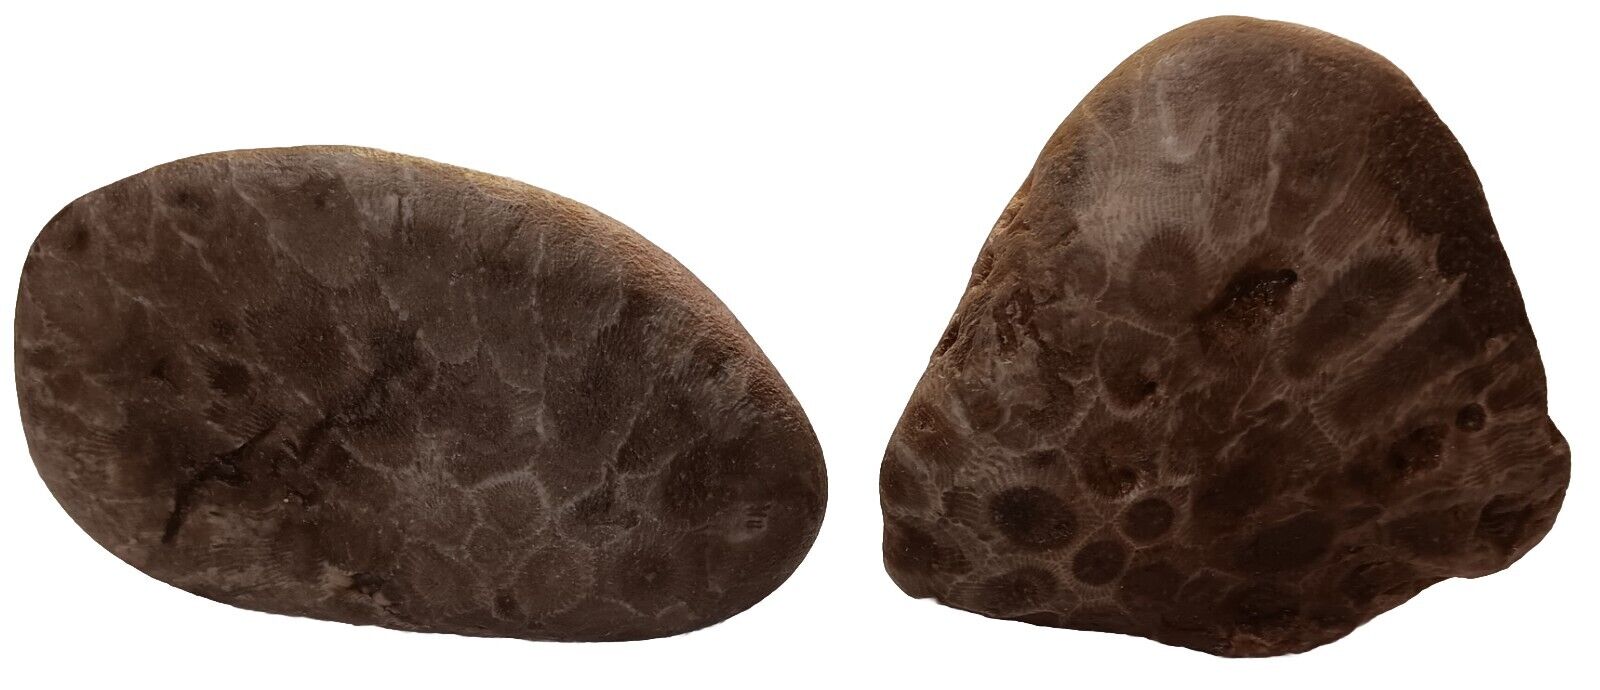 Petoskey Stones Large 2pc Raw Unpolished Rough Project / Craft Rocks 1 Pound